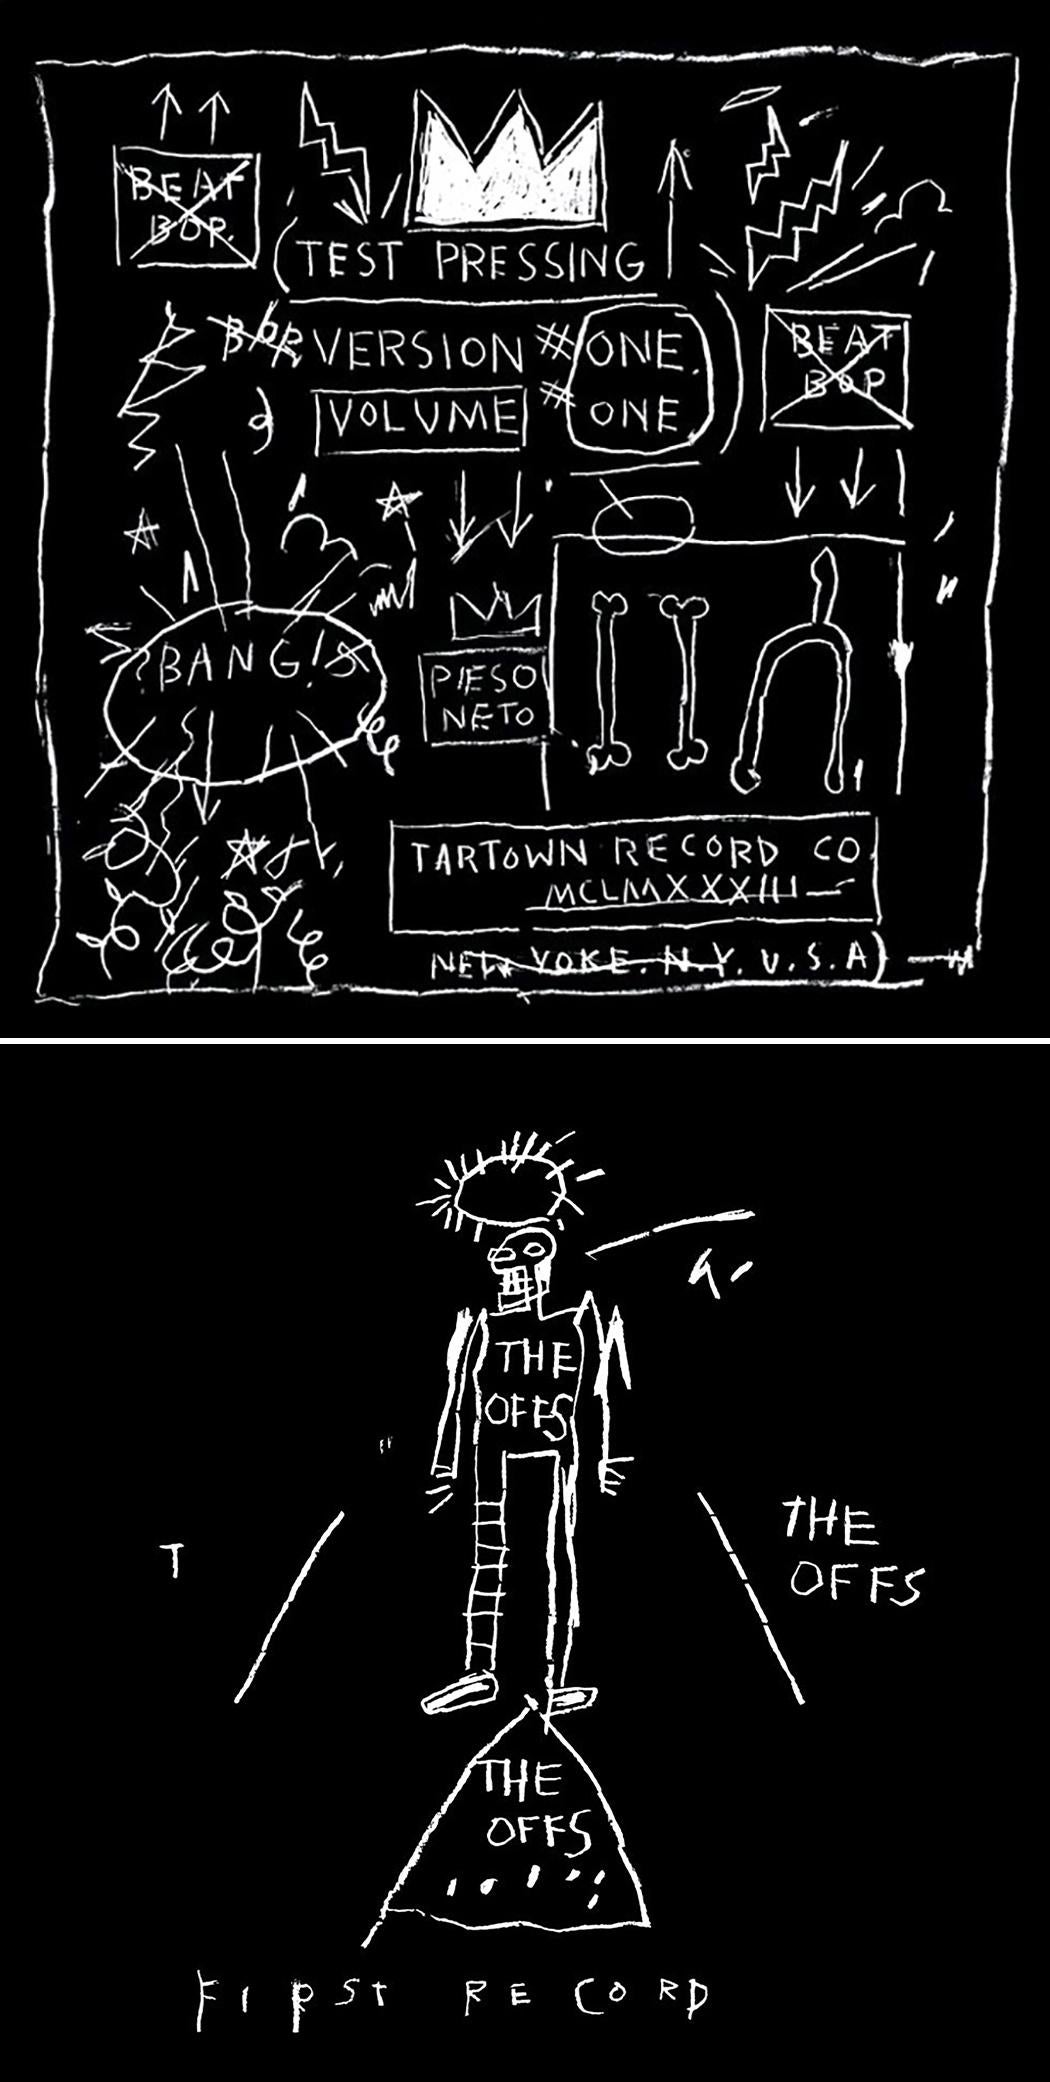 Basquiat record art: set of 2 (Basquiat The Offs Basquiat Beat Bop 2014/2019) - Art by Jean-Michel Basquiat